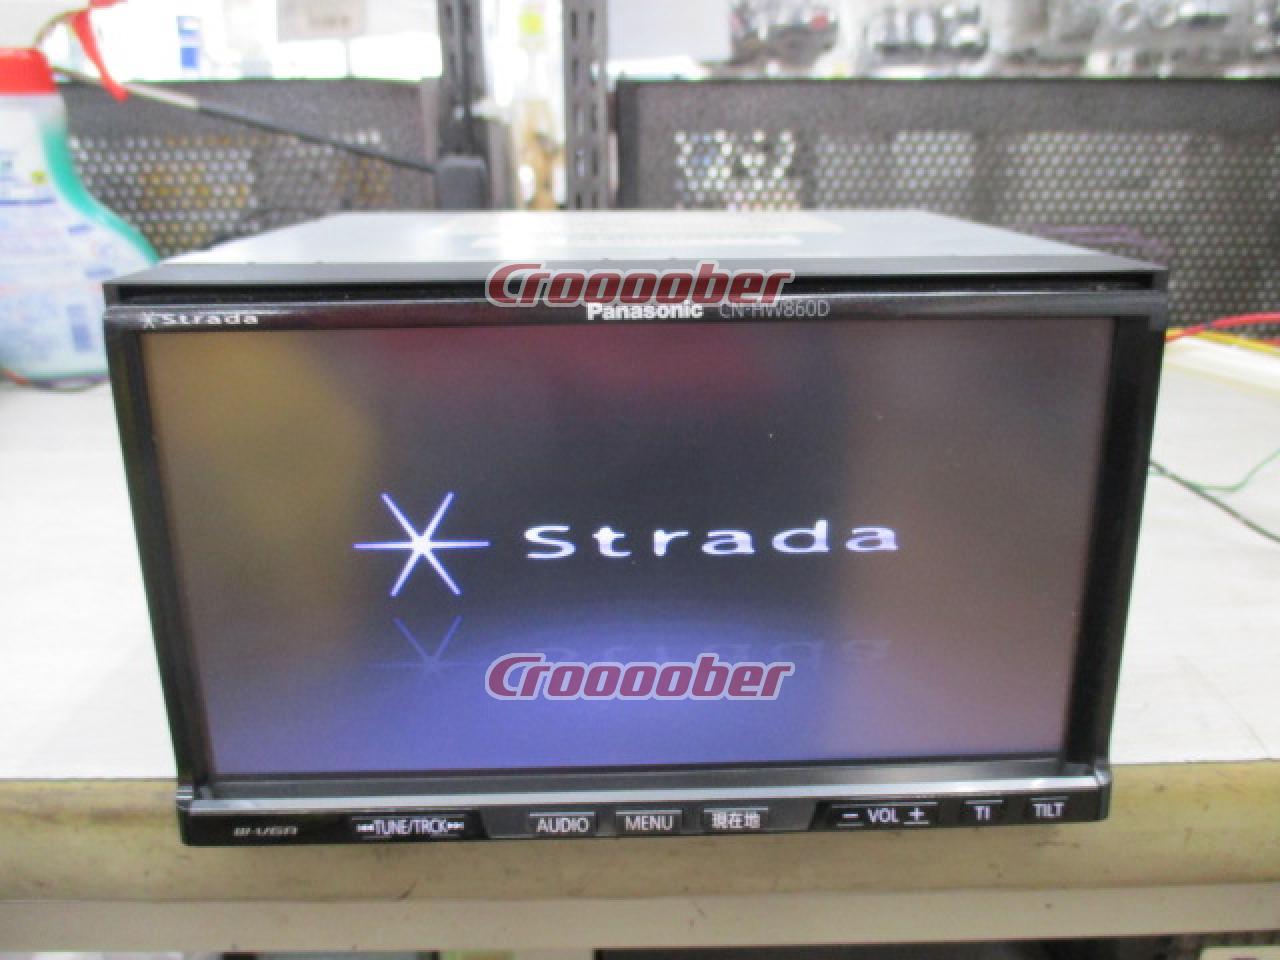 Panasonic * Strada CN-HW860D | HDD Navigation(digital) | Croooober